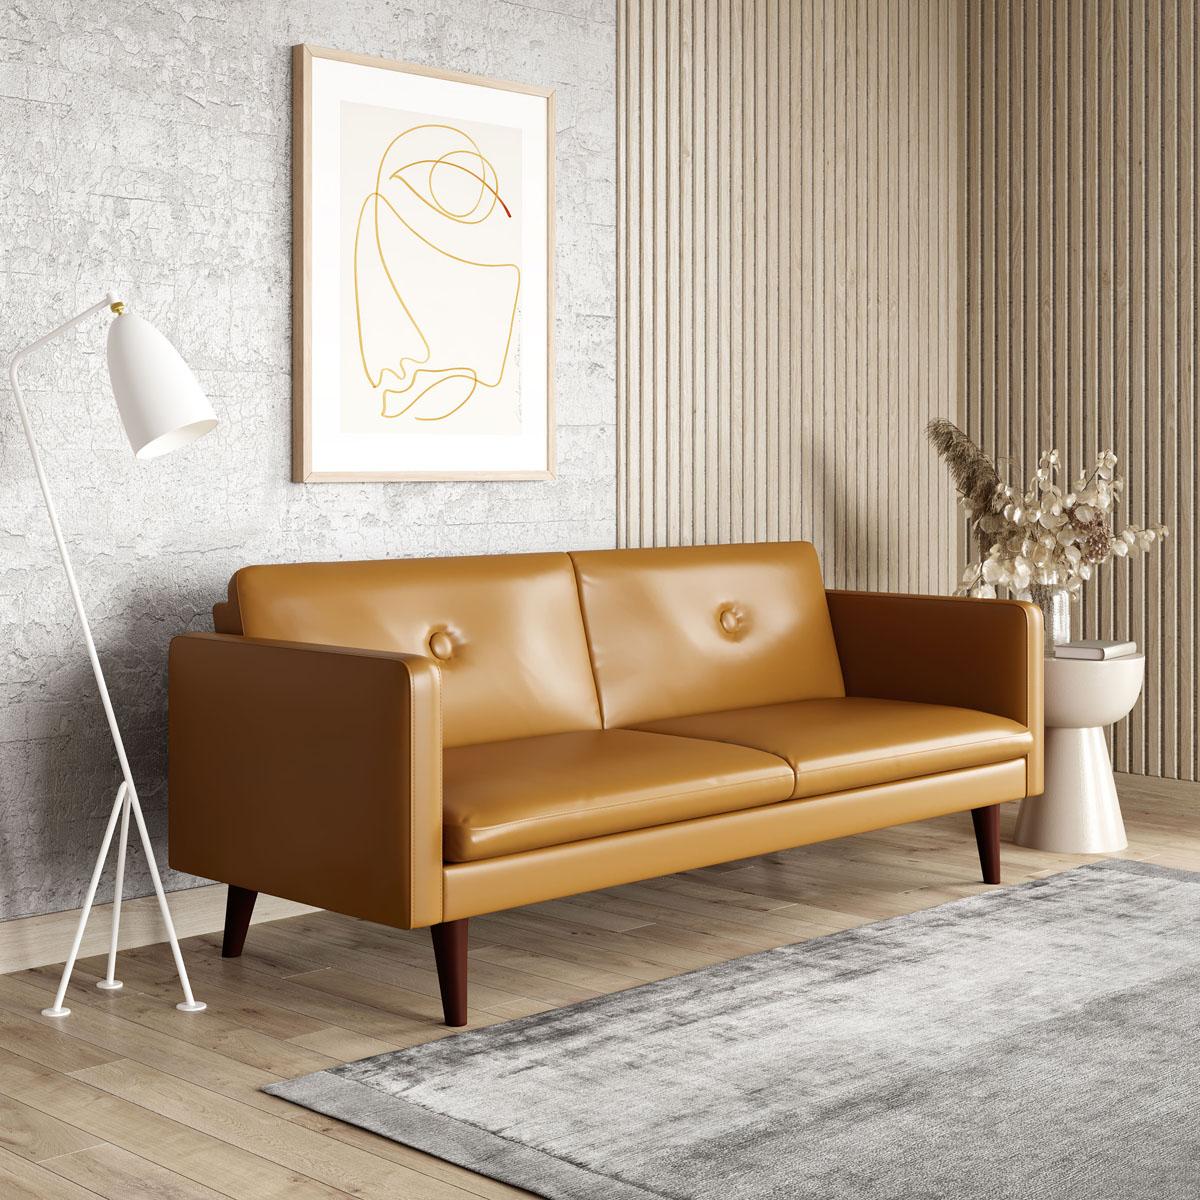 Serta Laurel 3-Seat Mid-Century Convertible Sleeper Sofa for $209 Shipped